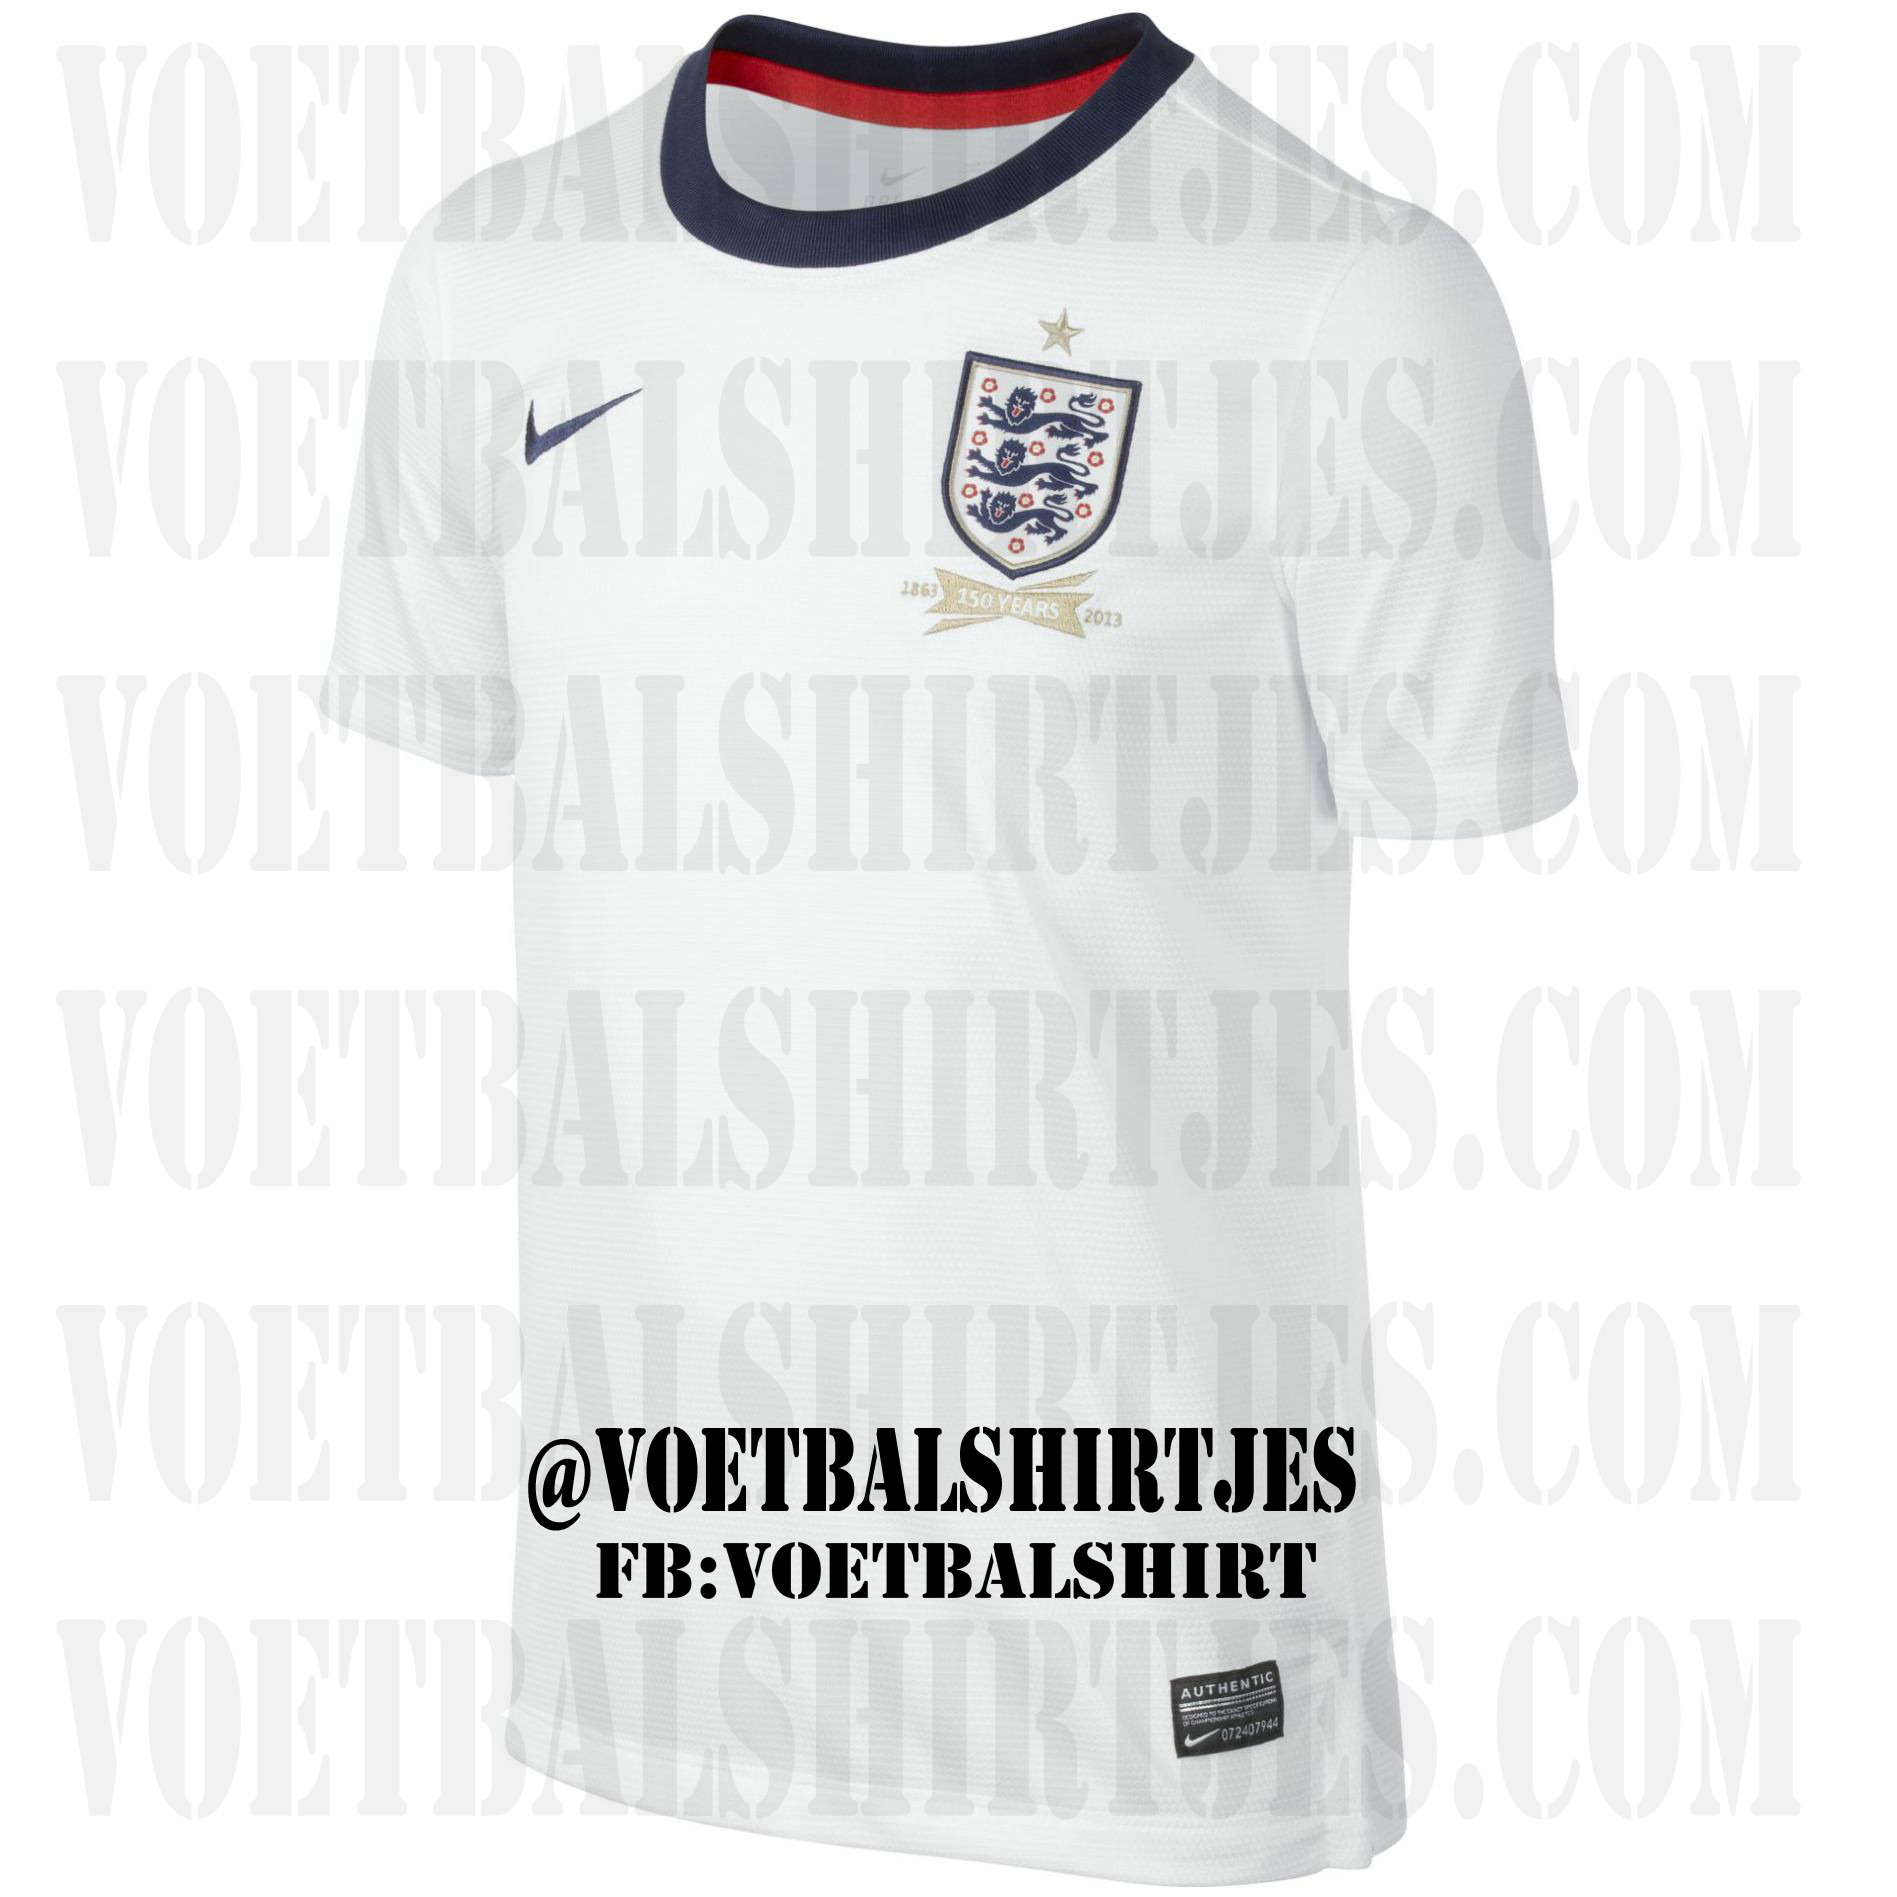 Nike Engeland jersey 13 14